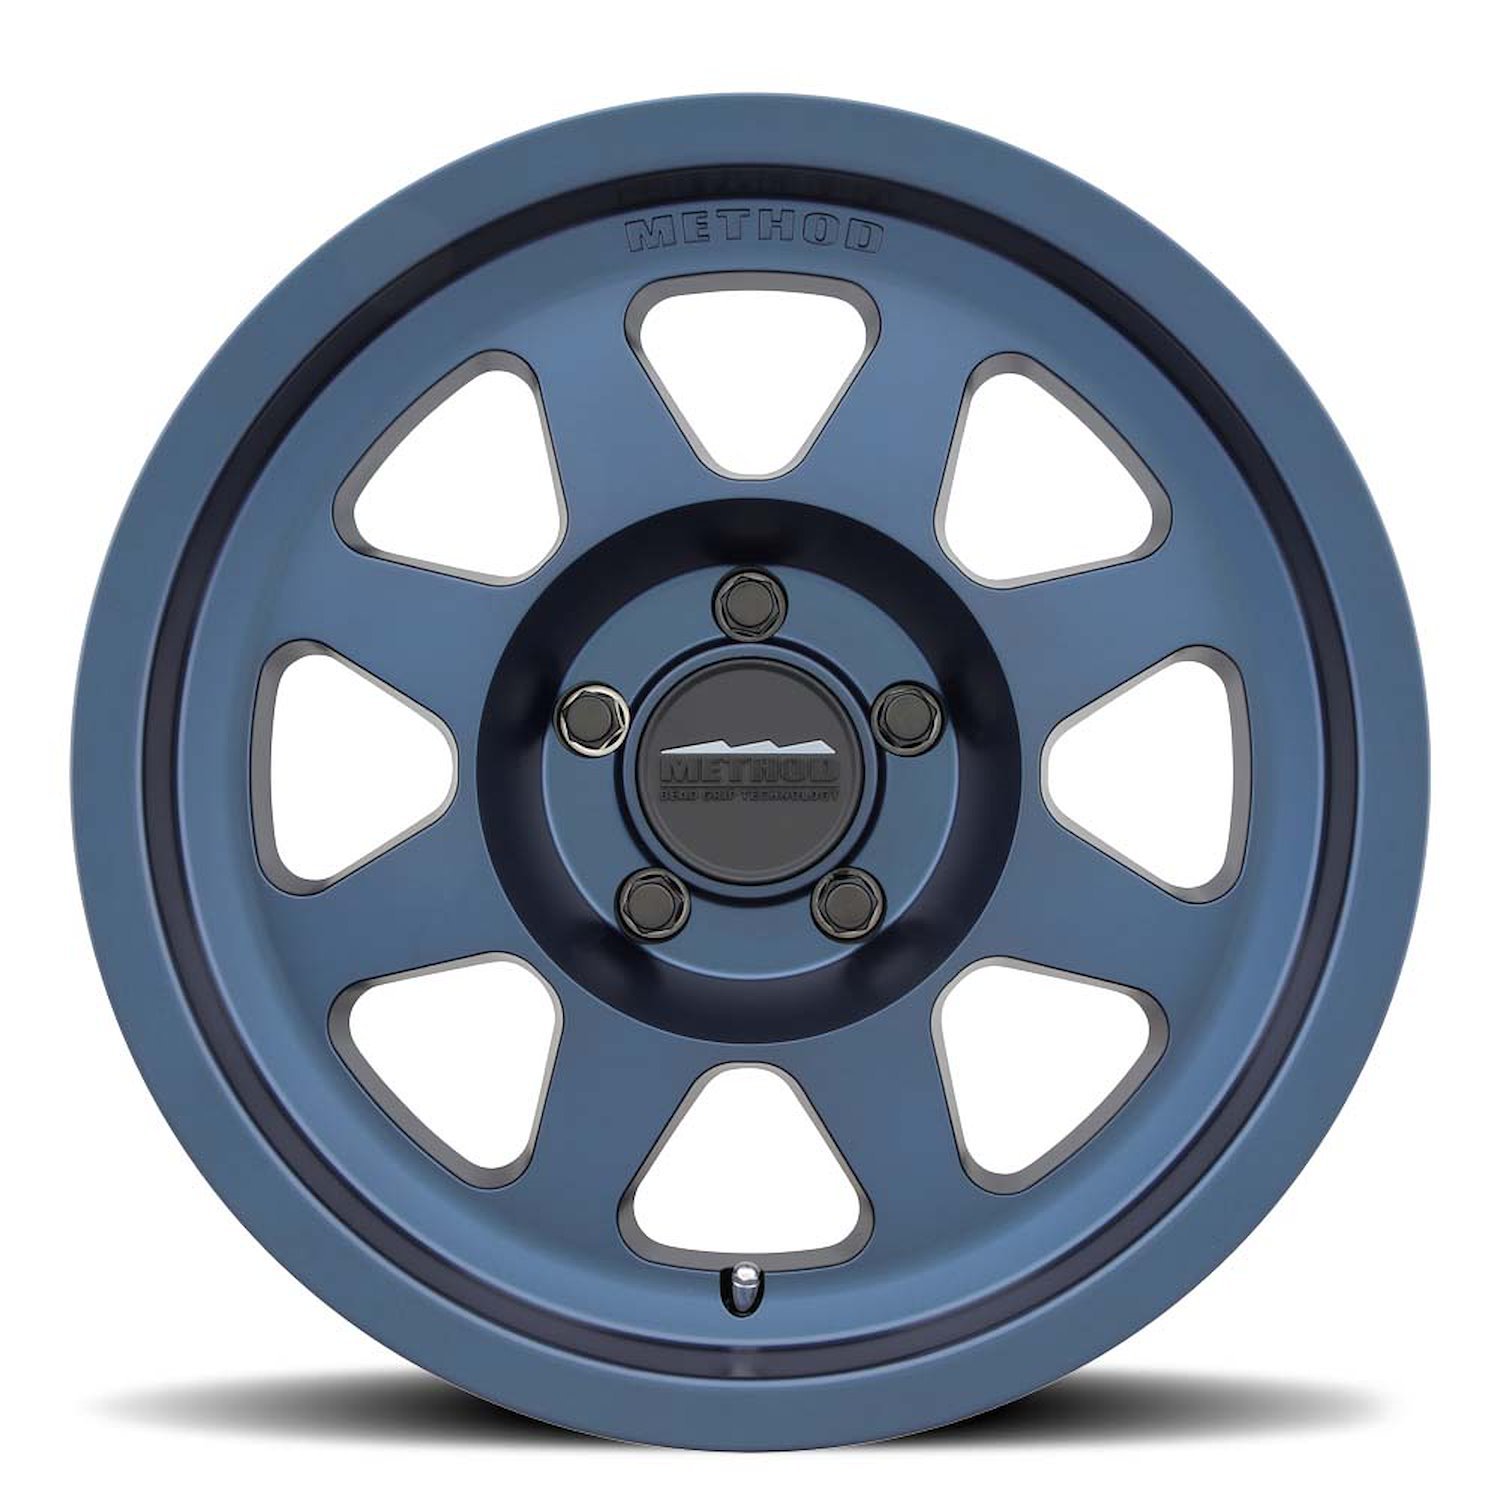 MR70189058625 TRAIL MR701 Bead Grip Wheel [Size: 18" x 9"] Bahia Blue